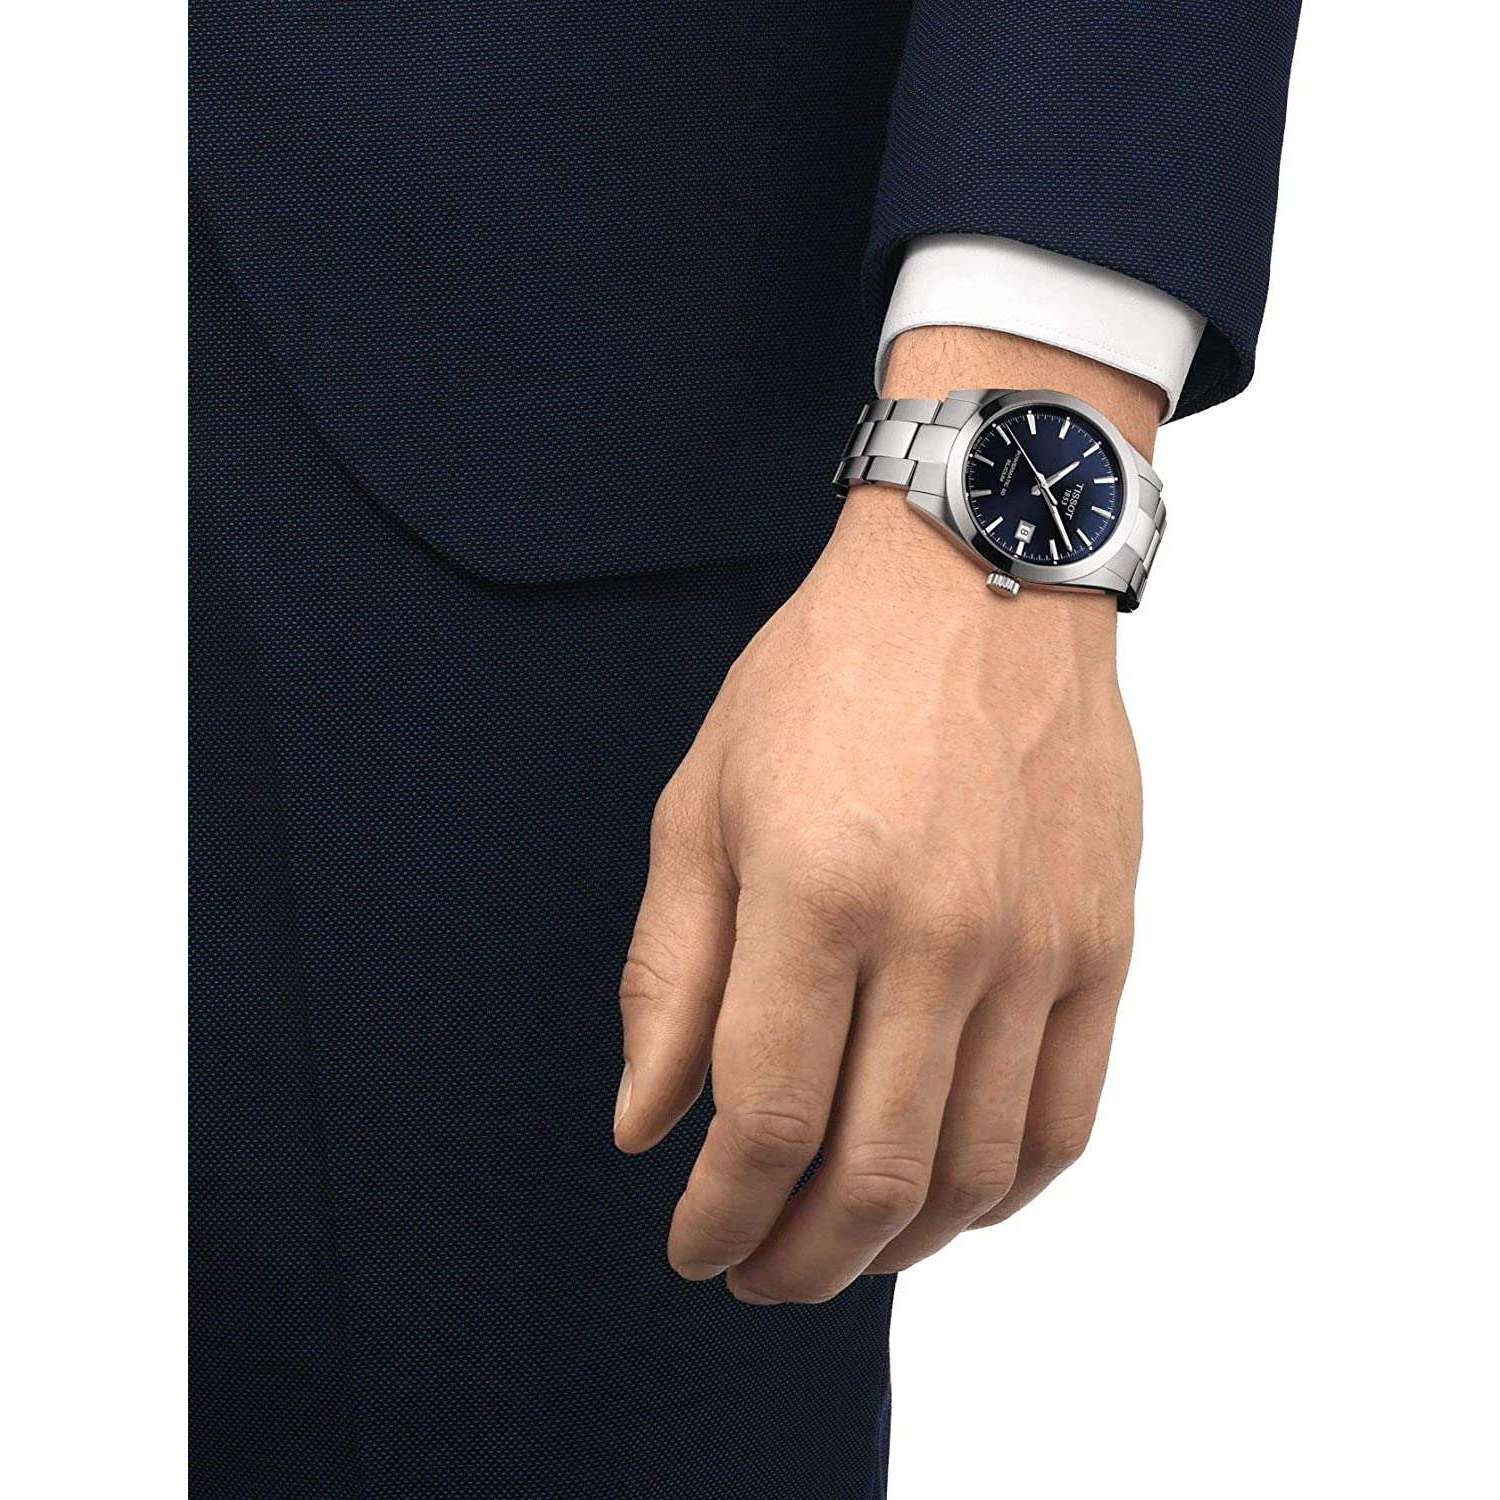 ROOK JAPAN:TISSOT GENTLEMAN POWERMATIC 80 SILICIUM 40 MM MEN WATCH T1274071104100,Luxury Watch,Tissot Gentleman